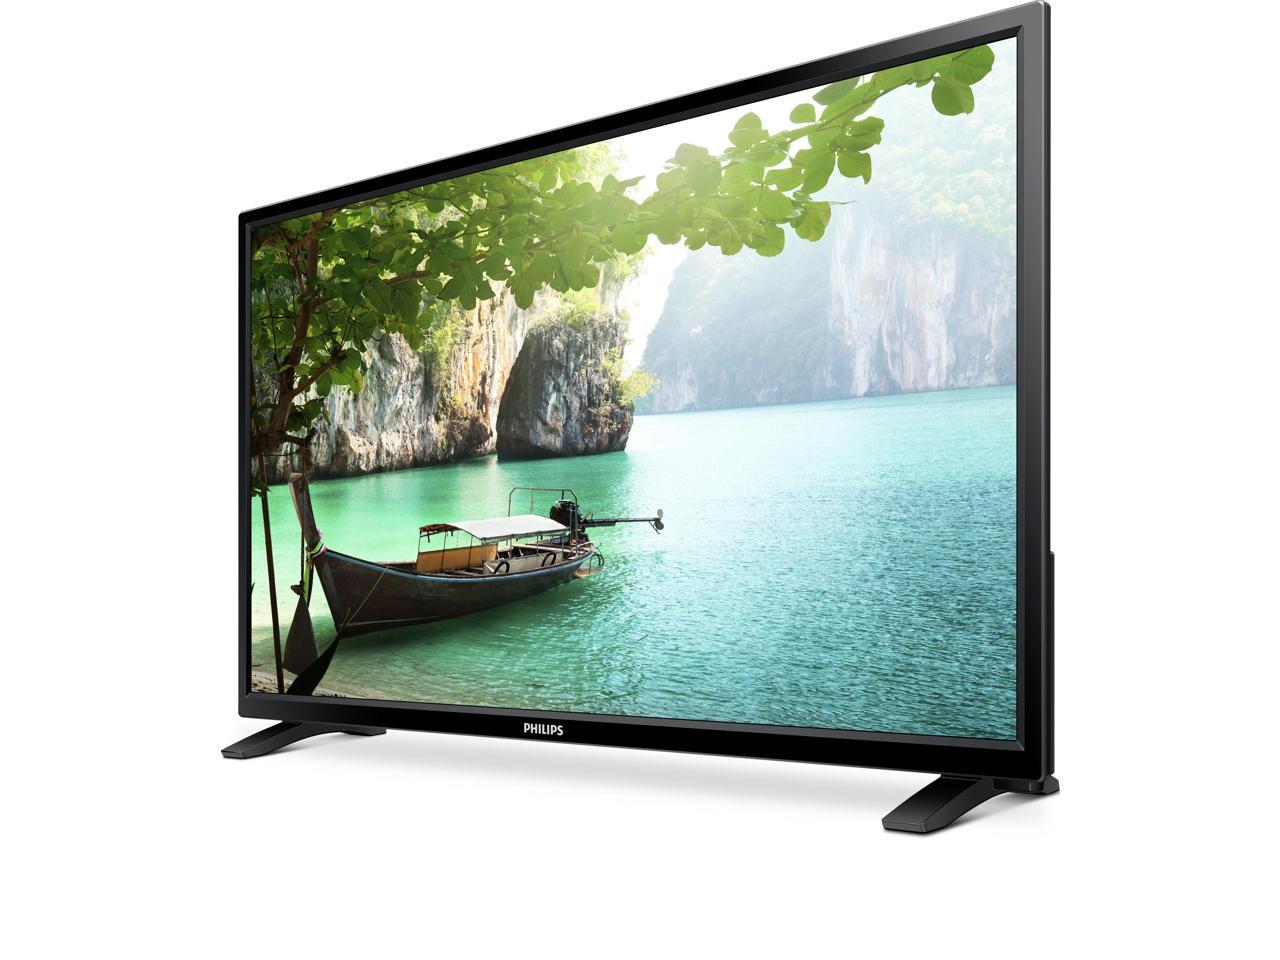 Топ телевизоров 24. Телевизор Филипс 24. Телевизор Philips 3000 4000 LCD Series. ТВ Филипс жидкокристаллический 42-7331. Kion телевизор 24" Smart TV (24h5l56kf) - черный.